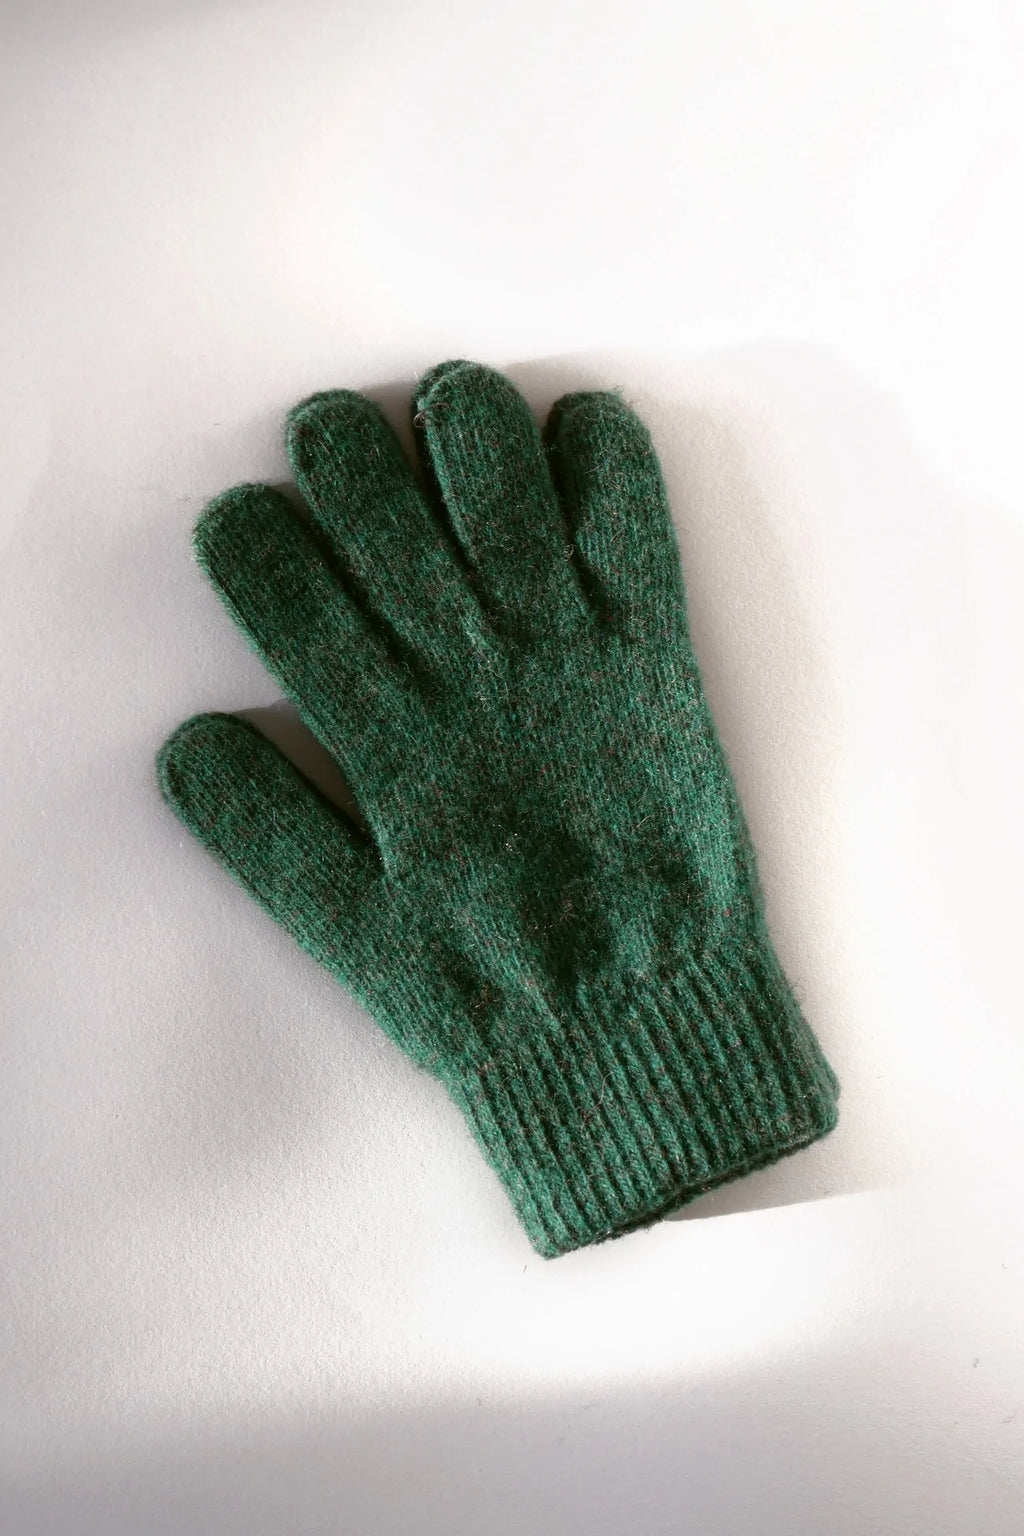 ELMNTL Comfy Cozy Wool Forest Green Gloves - The Mercantile London